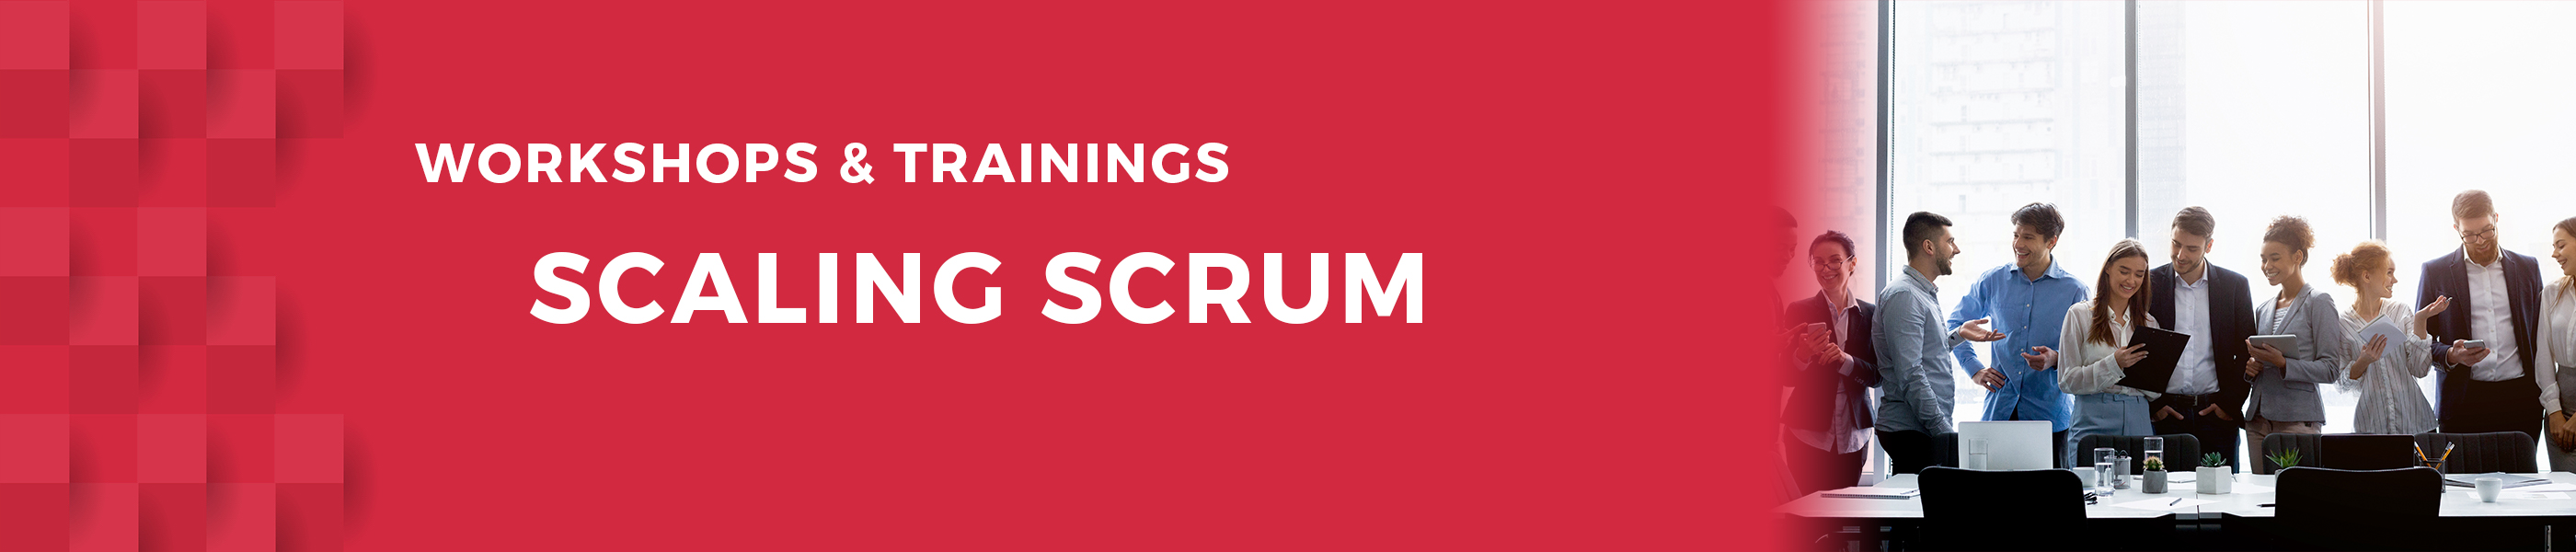 Scaling-Scrum-banner